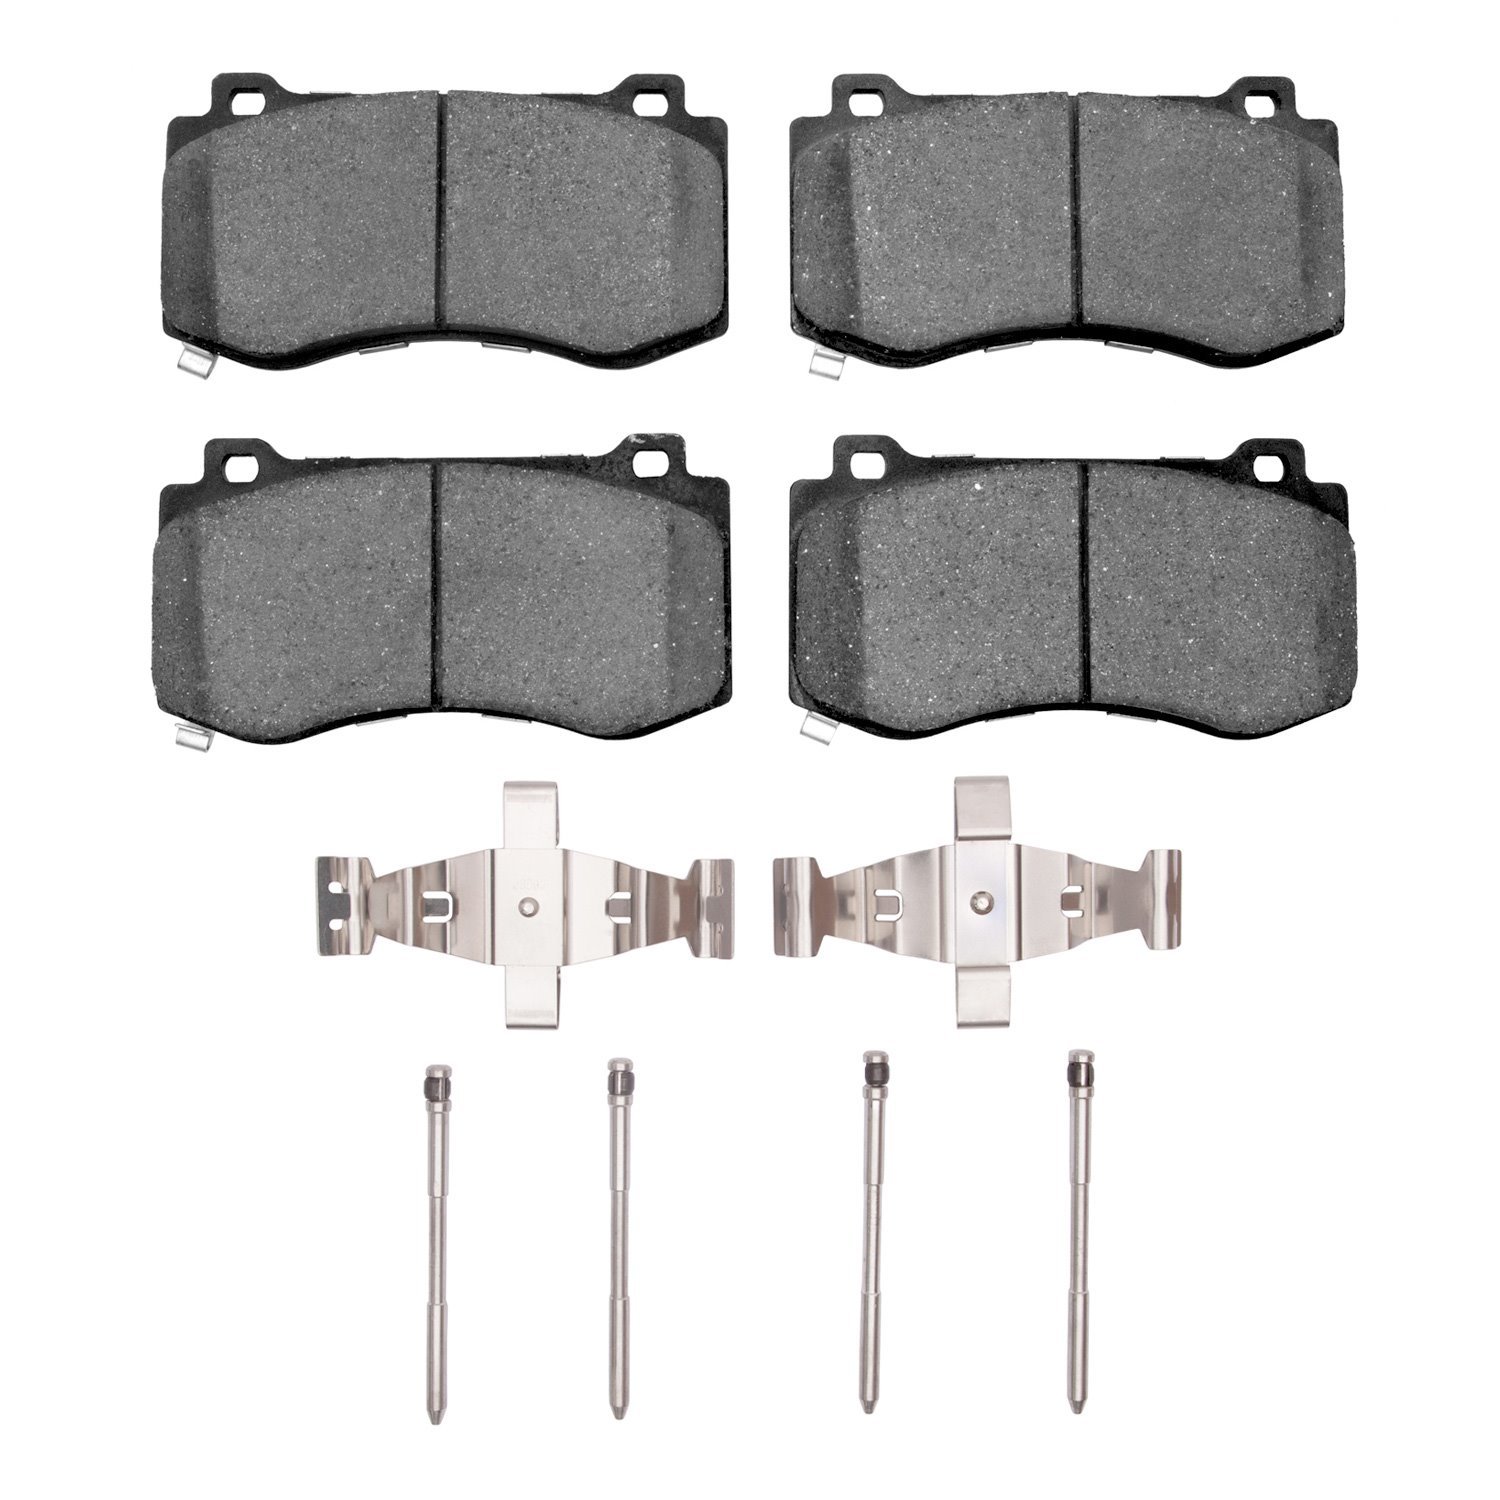 1600-1149-01 5000 Euro Ceramic Brake Pads & Hardware Kit, Fits Select Mopar, Position: Front